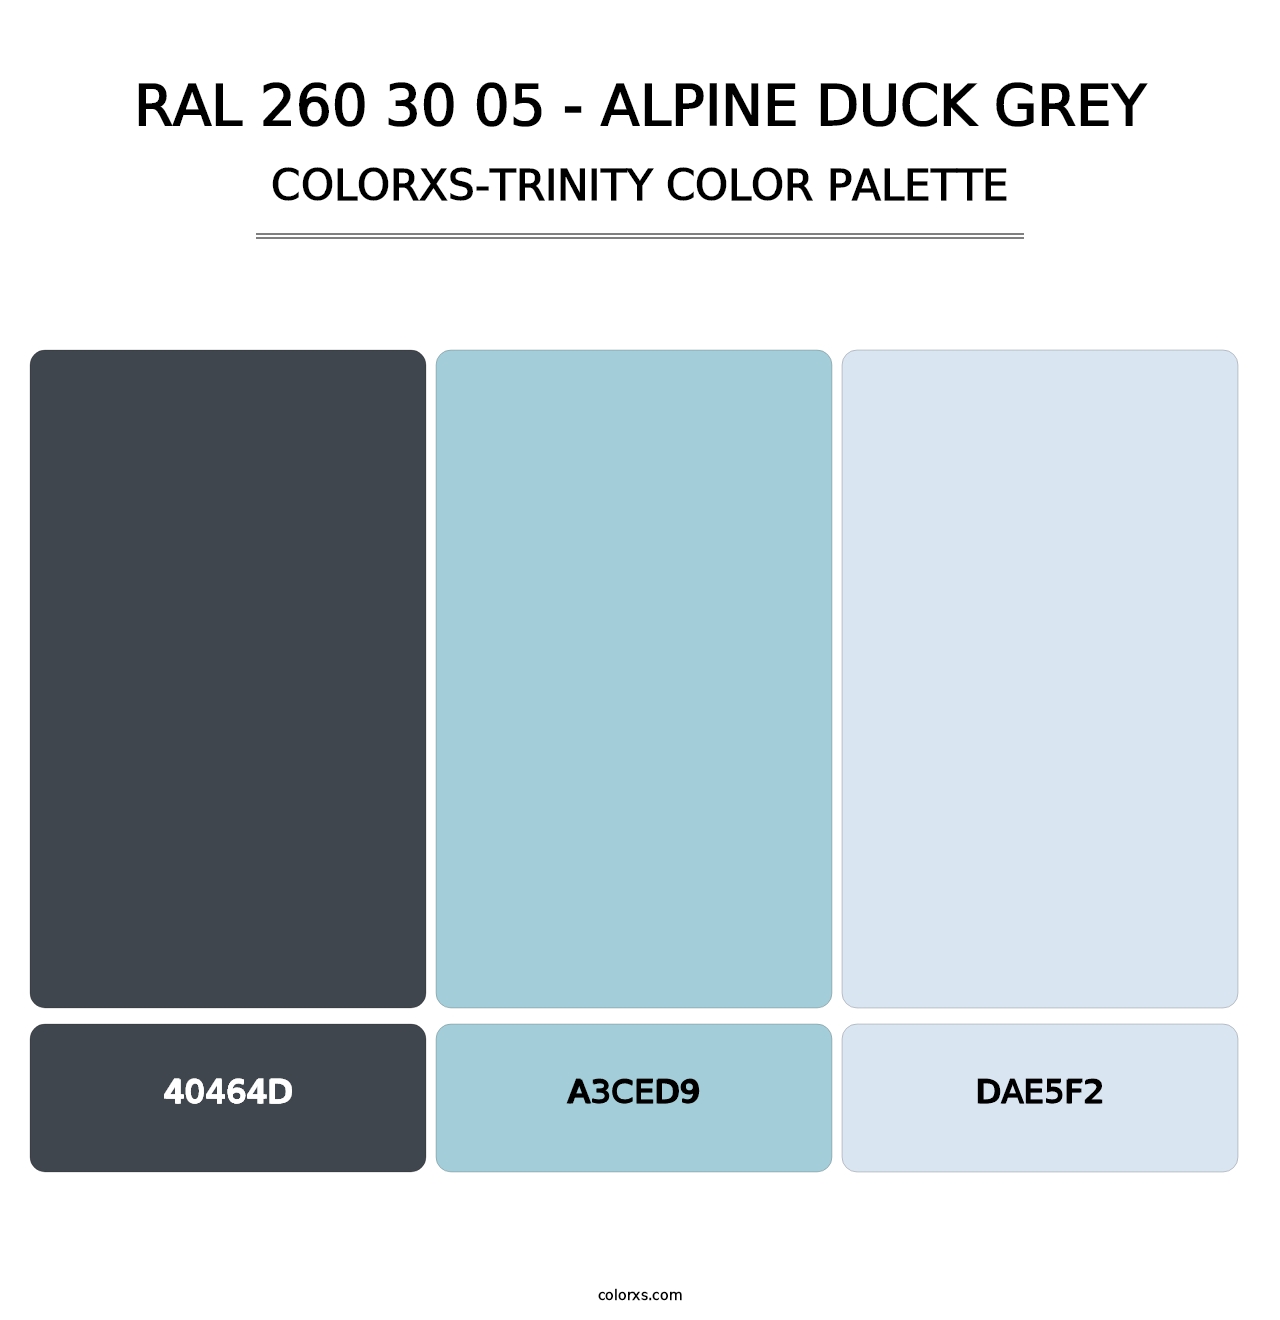 RAL 260 30 05 - Alpine Duck Grey - Colorxs Trinity Palette